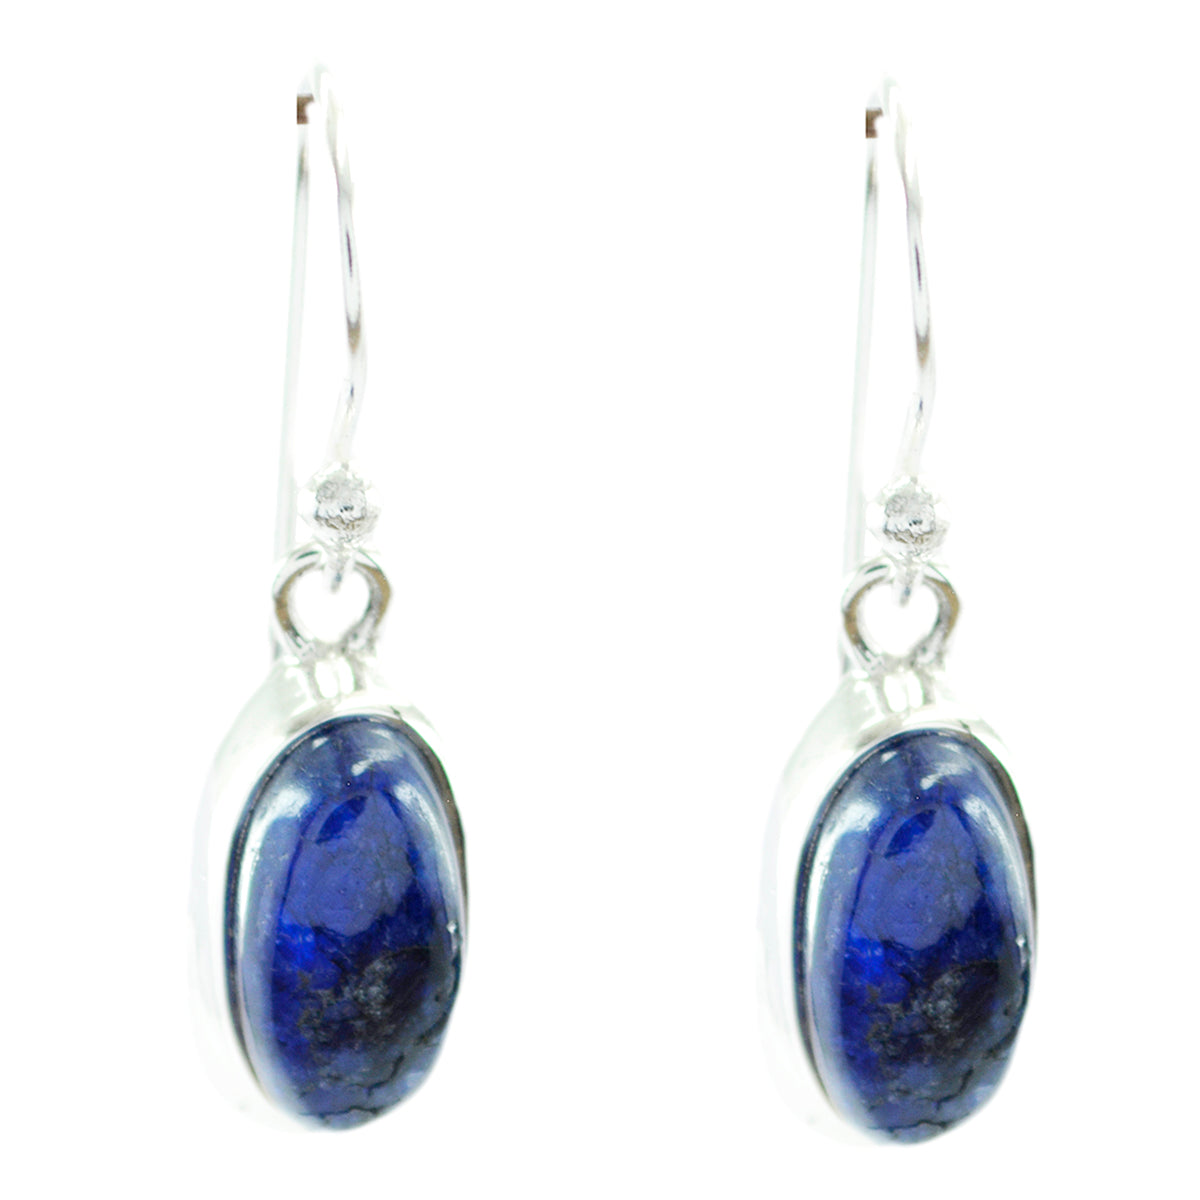 Riyo Natural Gemstone oval Cabochon Nevy Blue Lapis Lazuli Silver Earring frinendship day gift